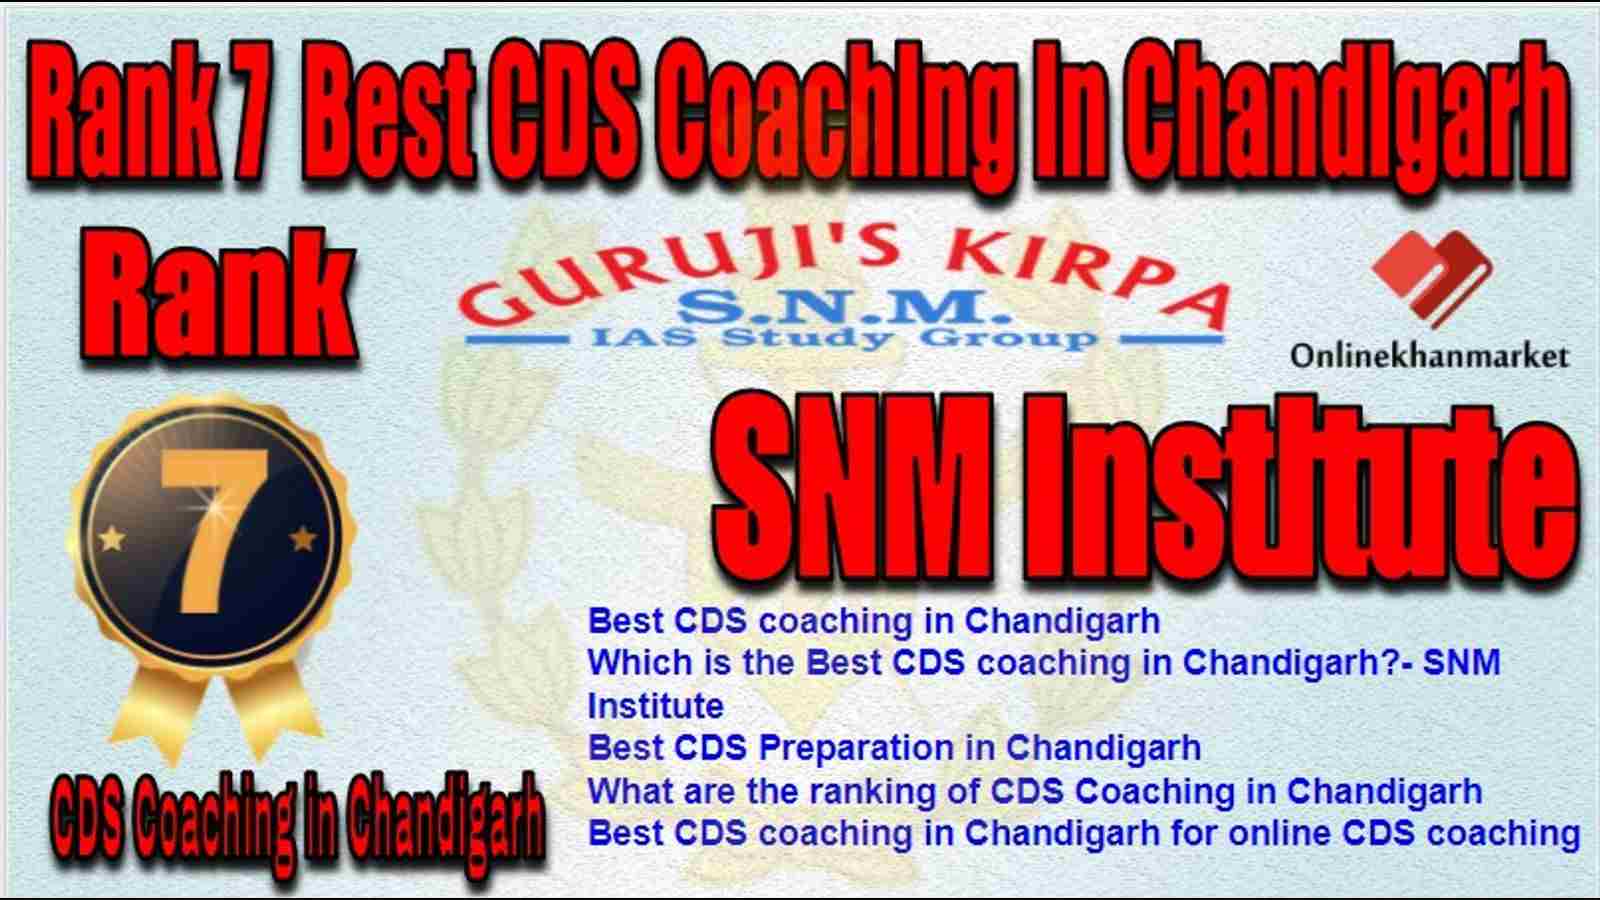 Rank 7 Best CDS Coaching in chandigarh